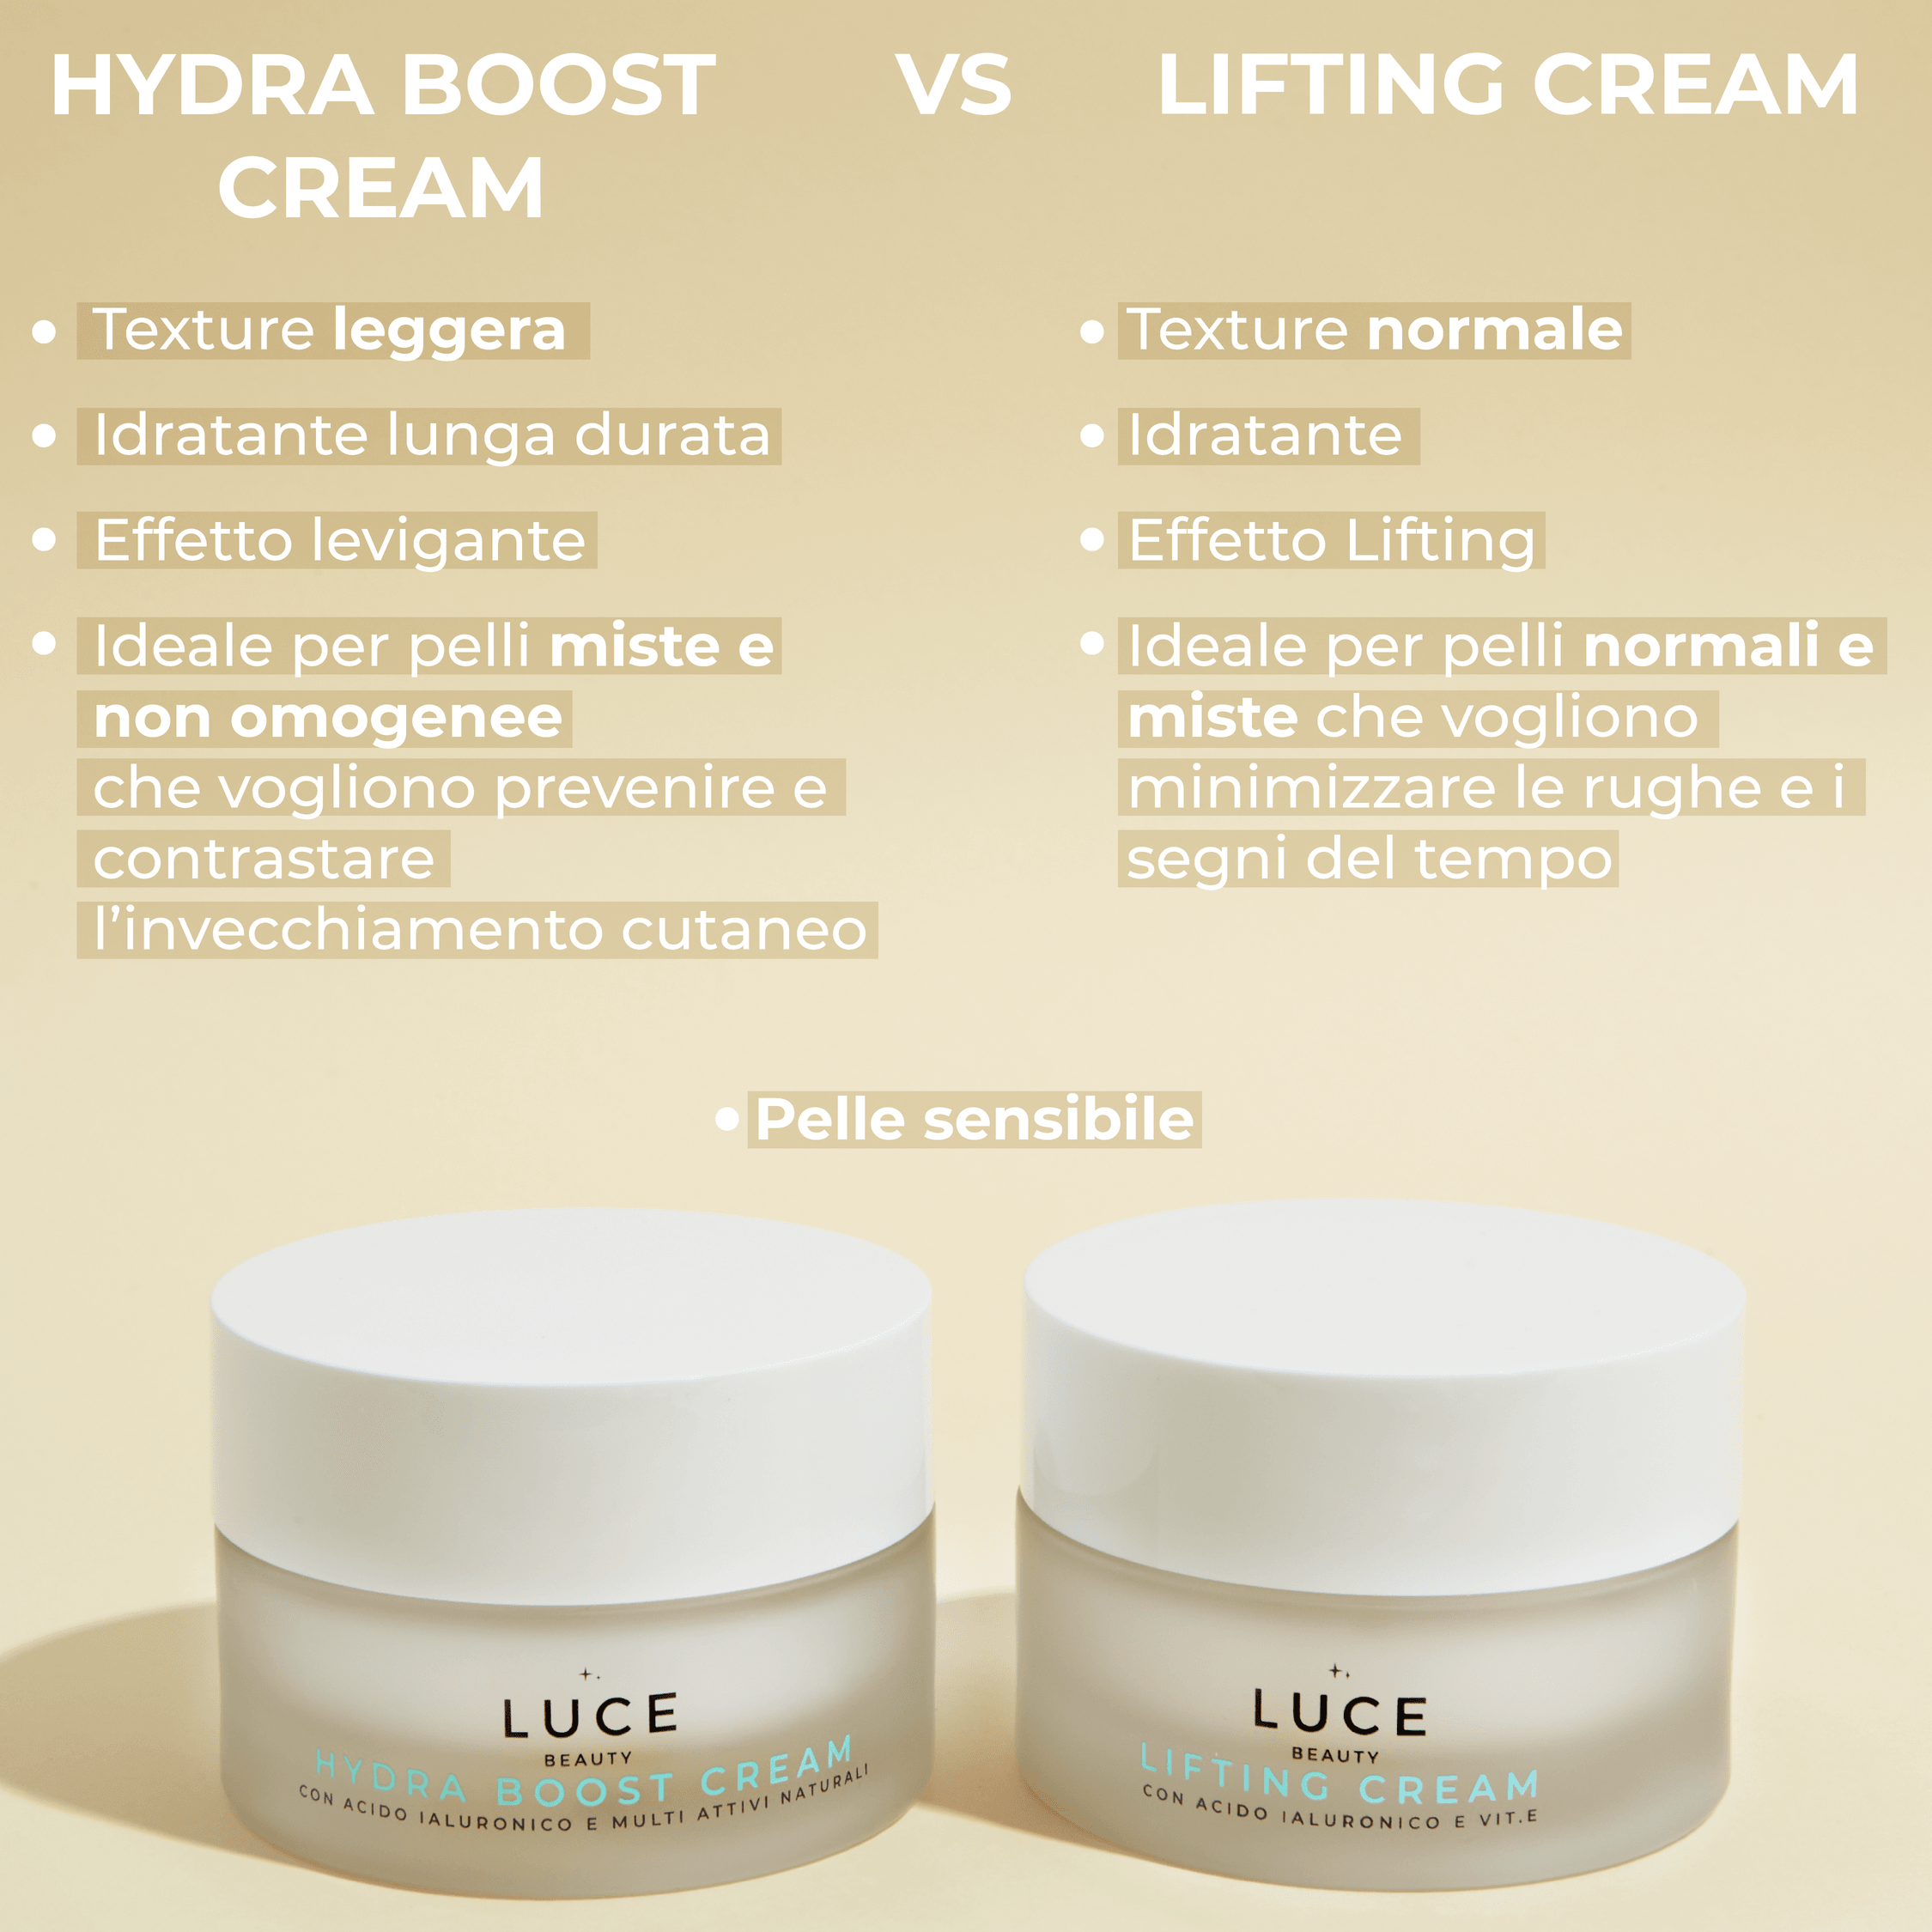 Confronto Hydra Boost Cream - Lifting Cream - Luce Beauty